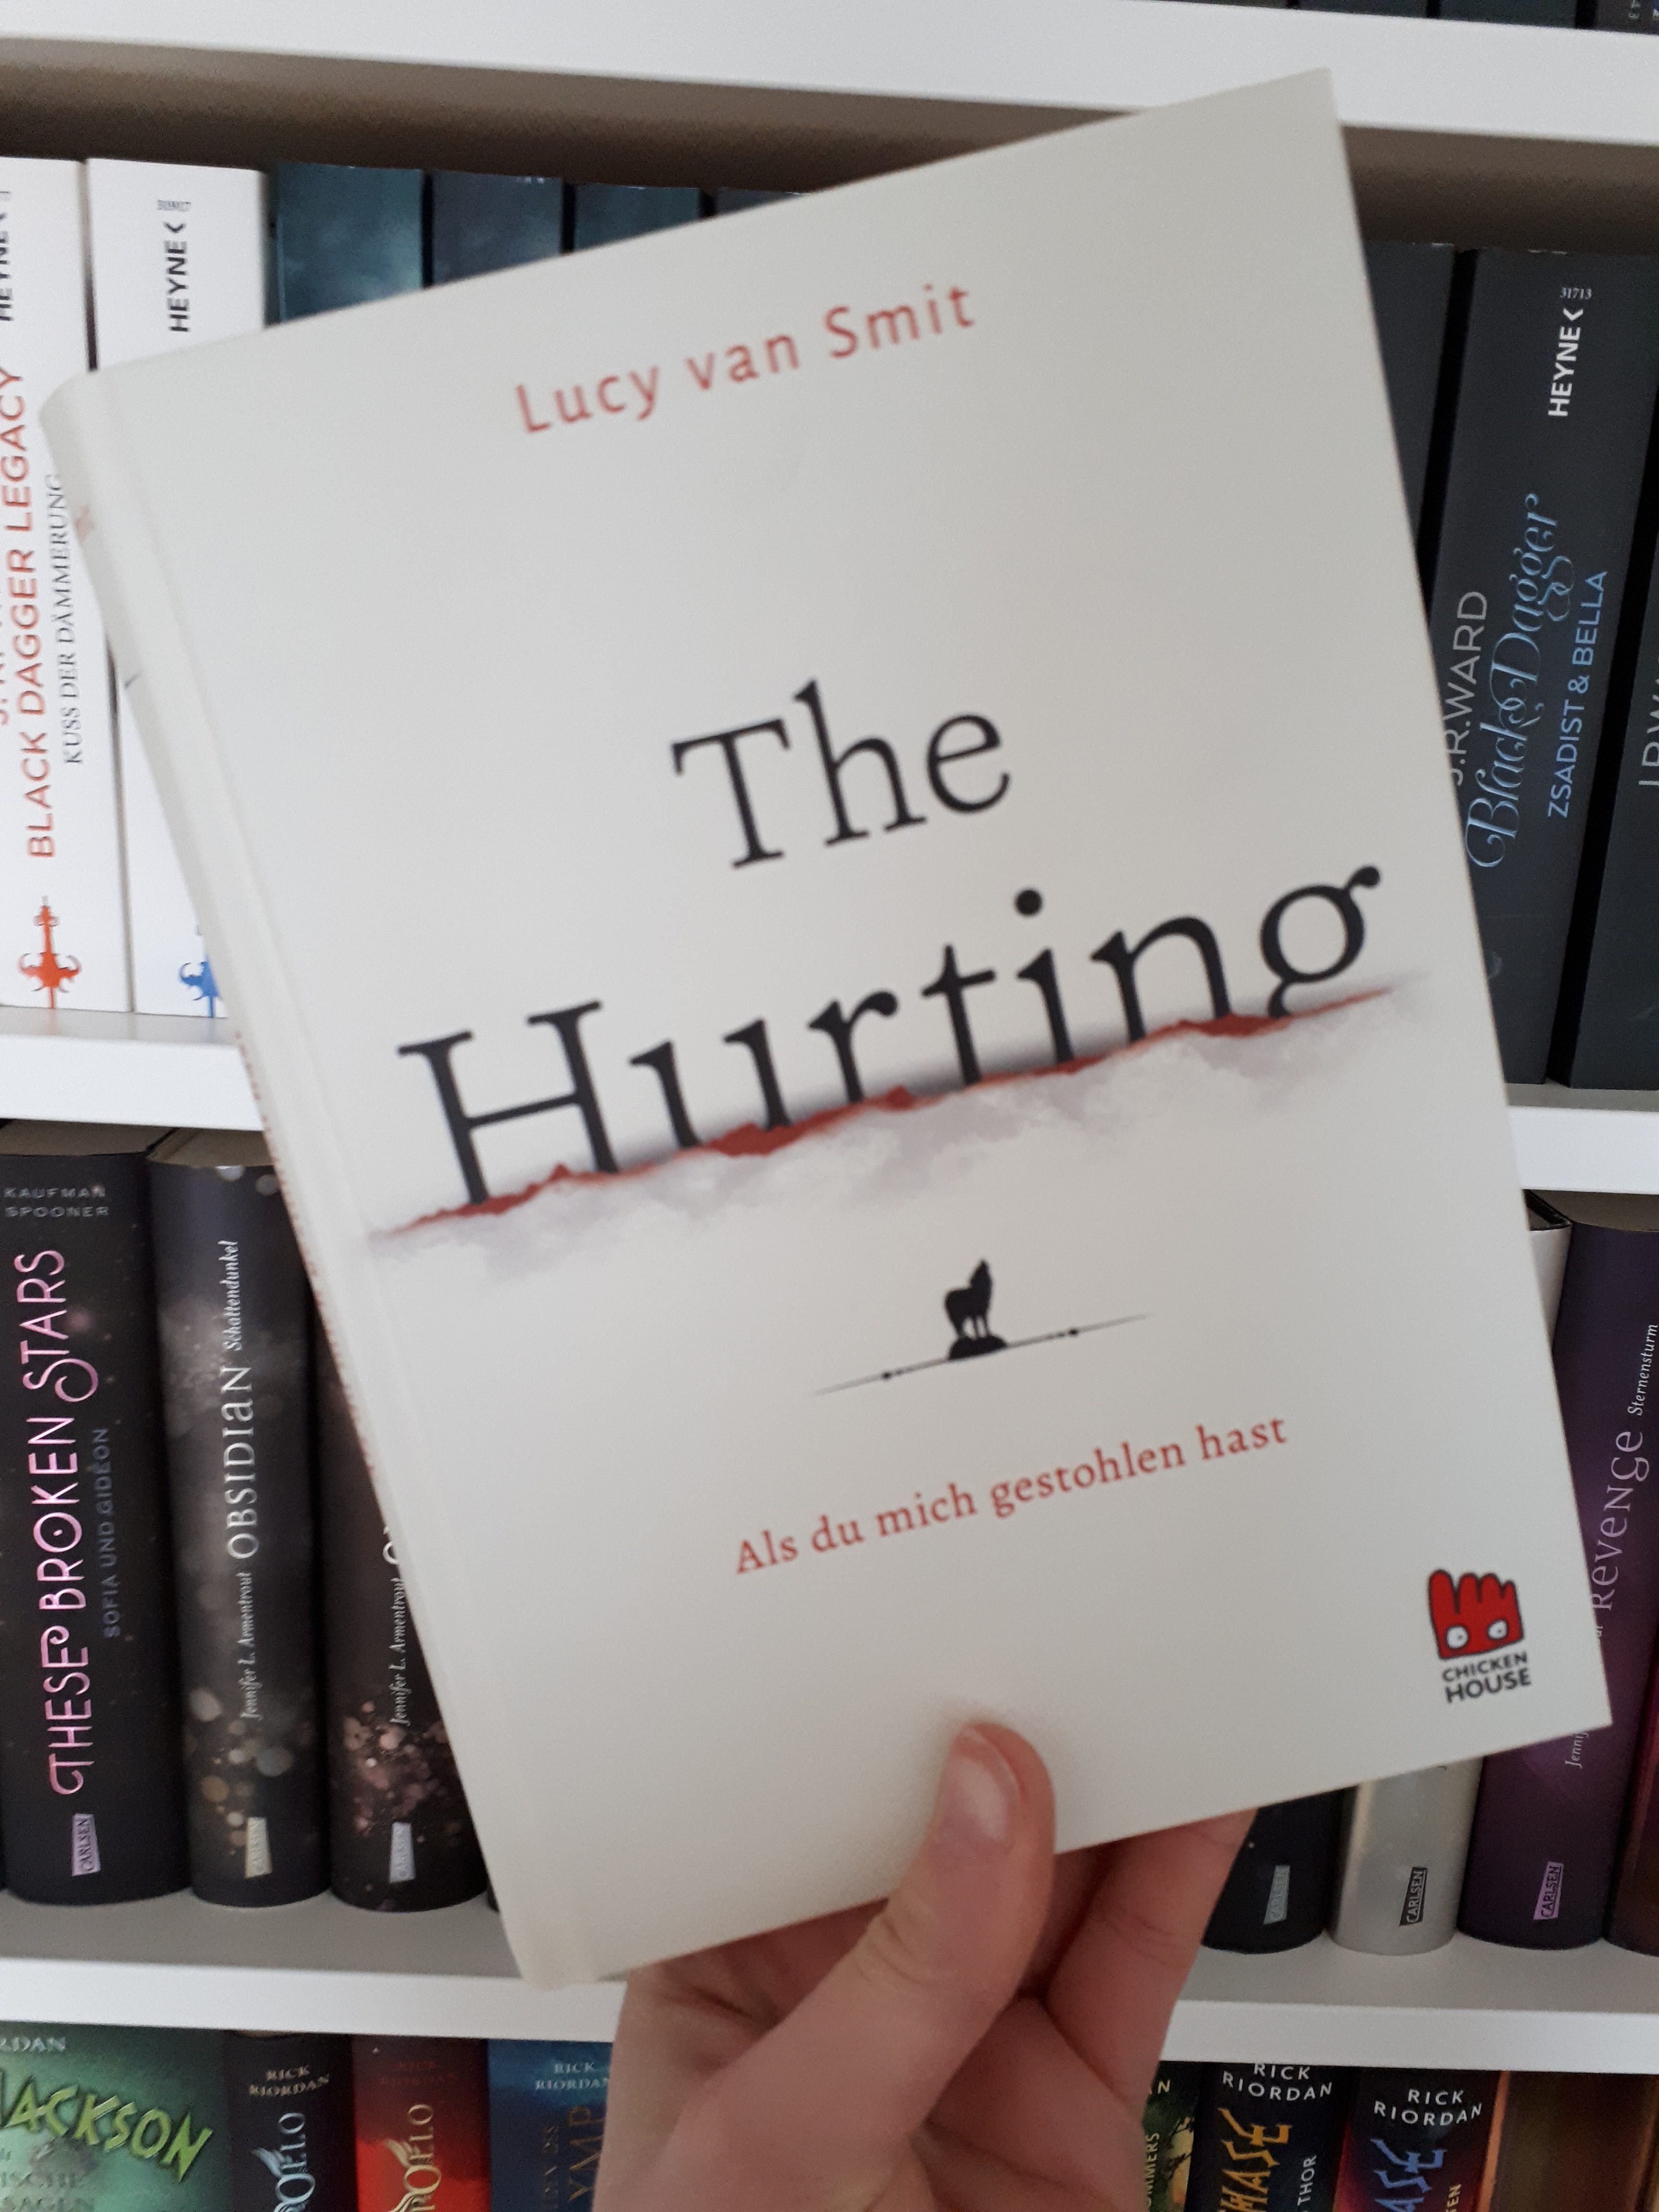 [Werbung] The Hurting: Als du mich gestohlen hast – Lucy van Smit